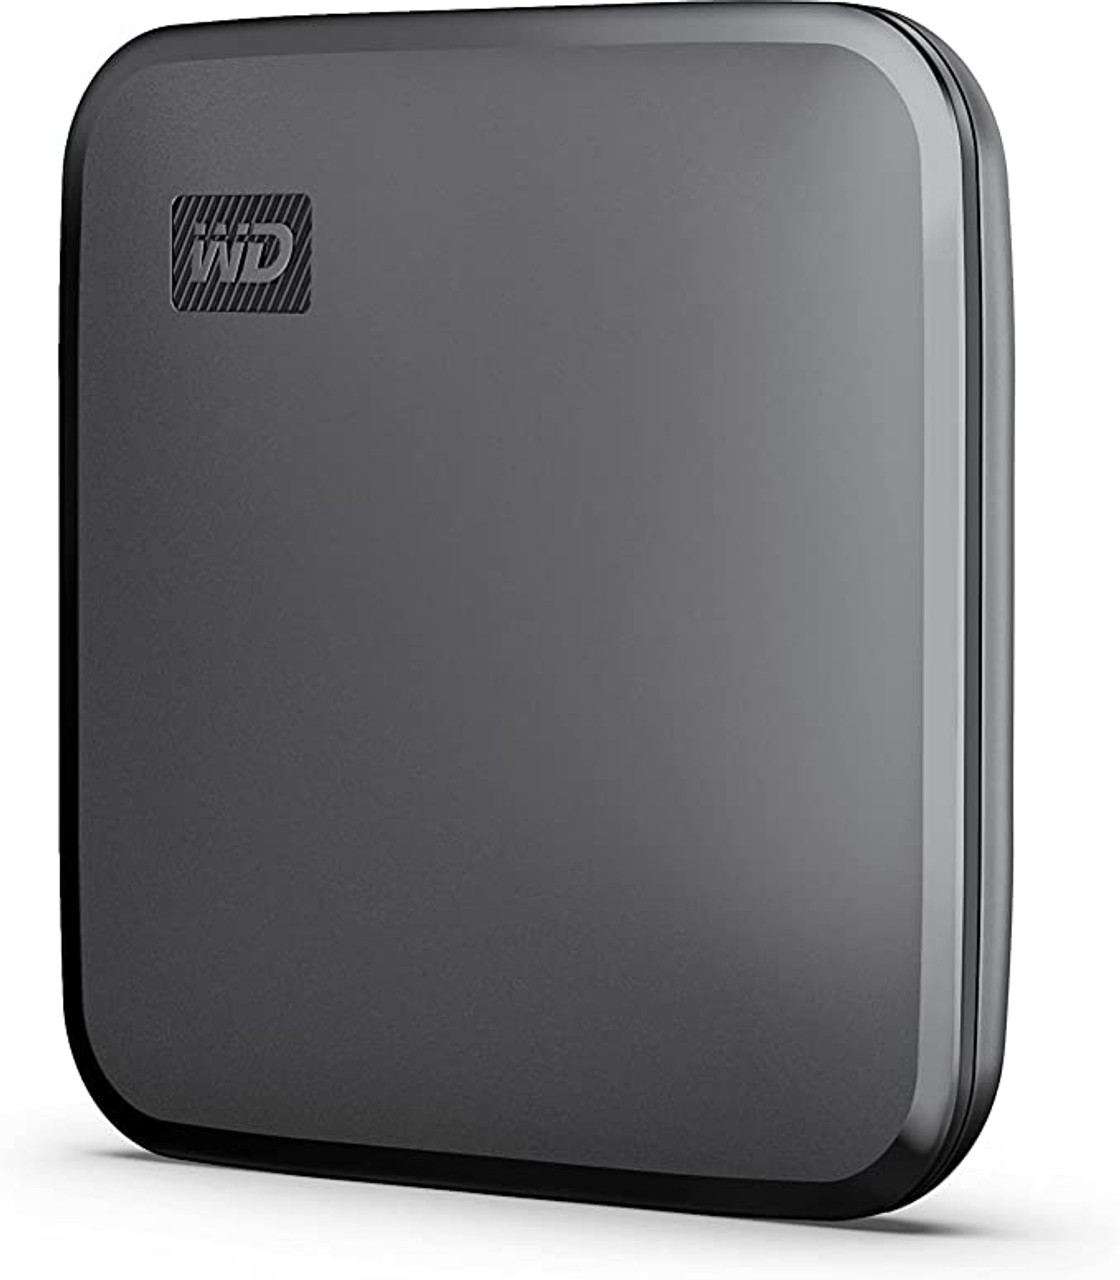  WD 5TB Elements Portable HDD, External Hard Drive, USB 3.0 for  PC & Mac, Plug and Play Ready - WDBU6Y0050BBK-WESN : Electronics